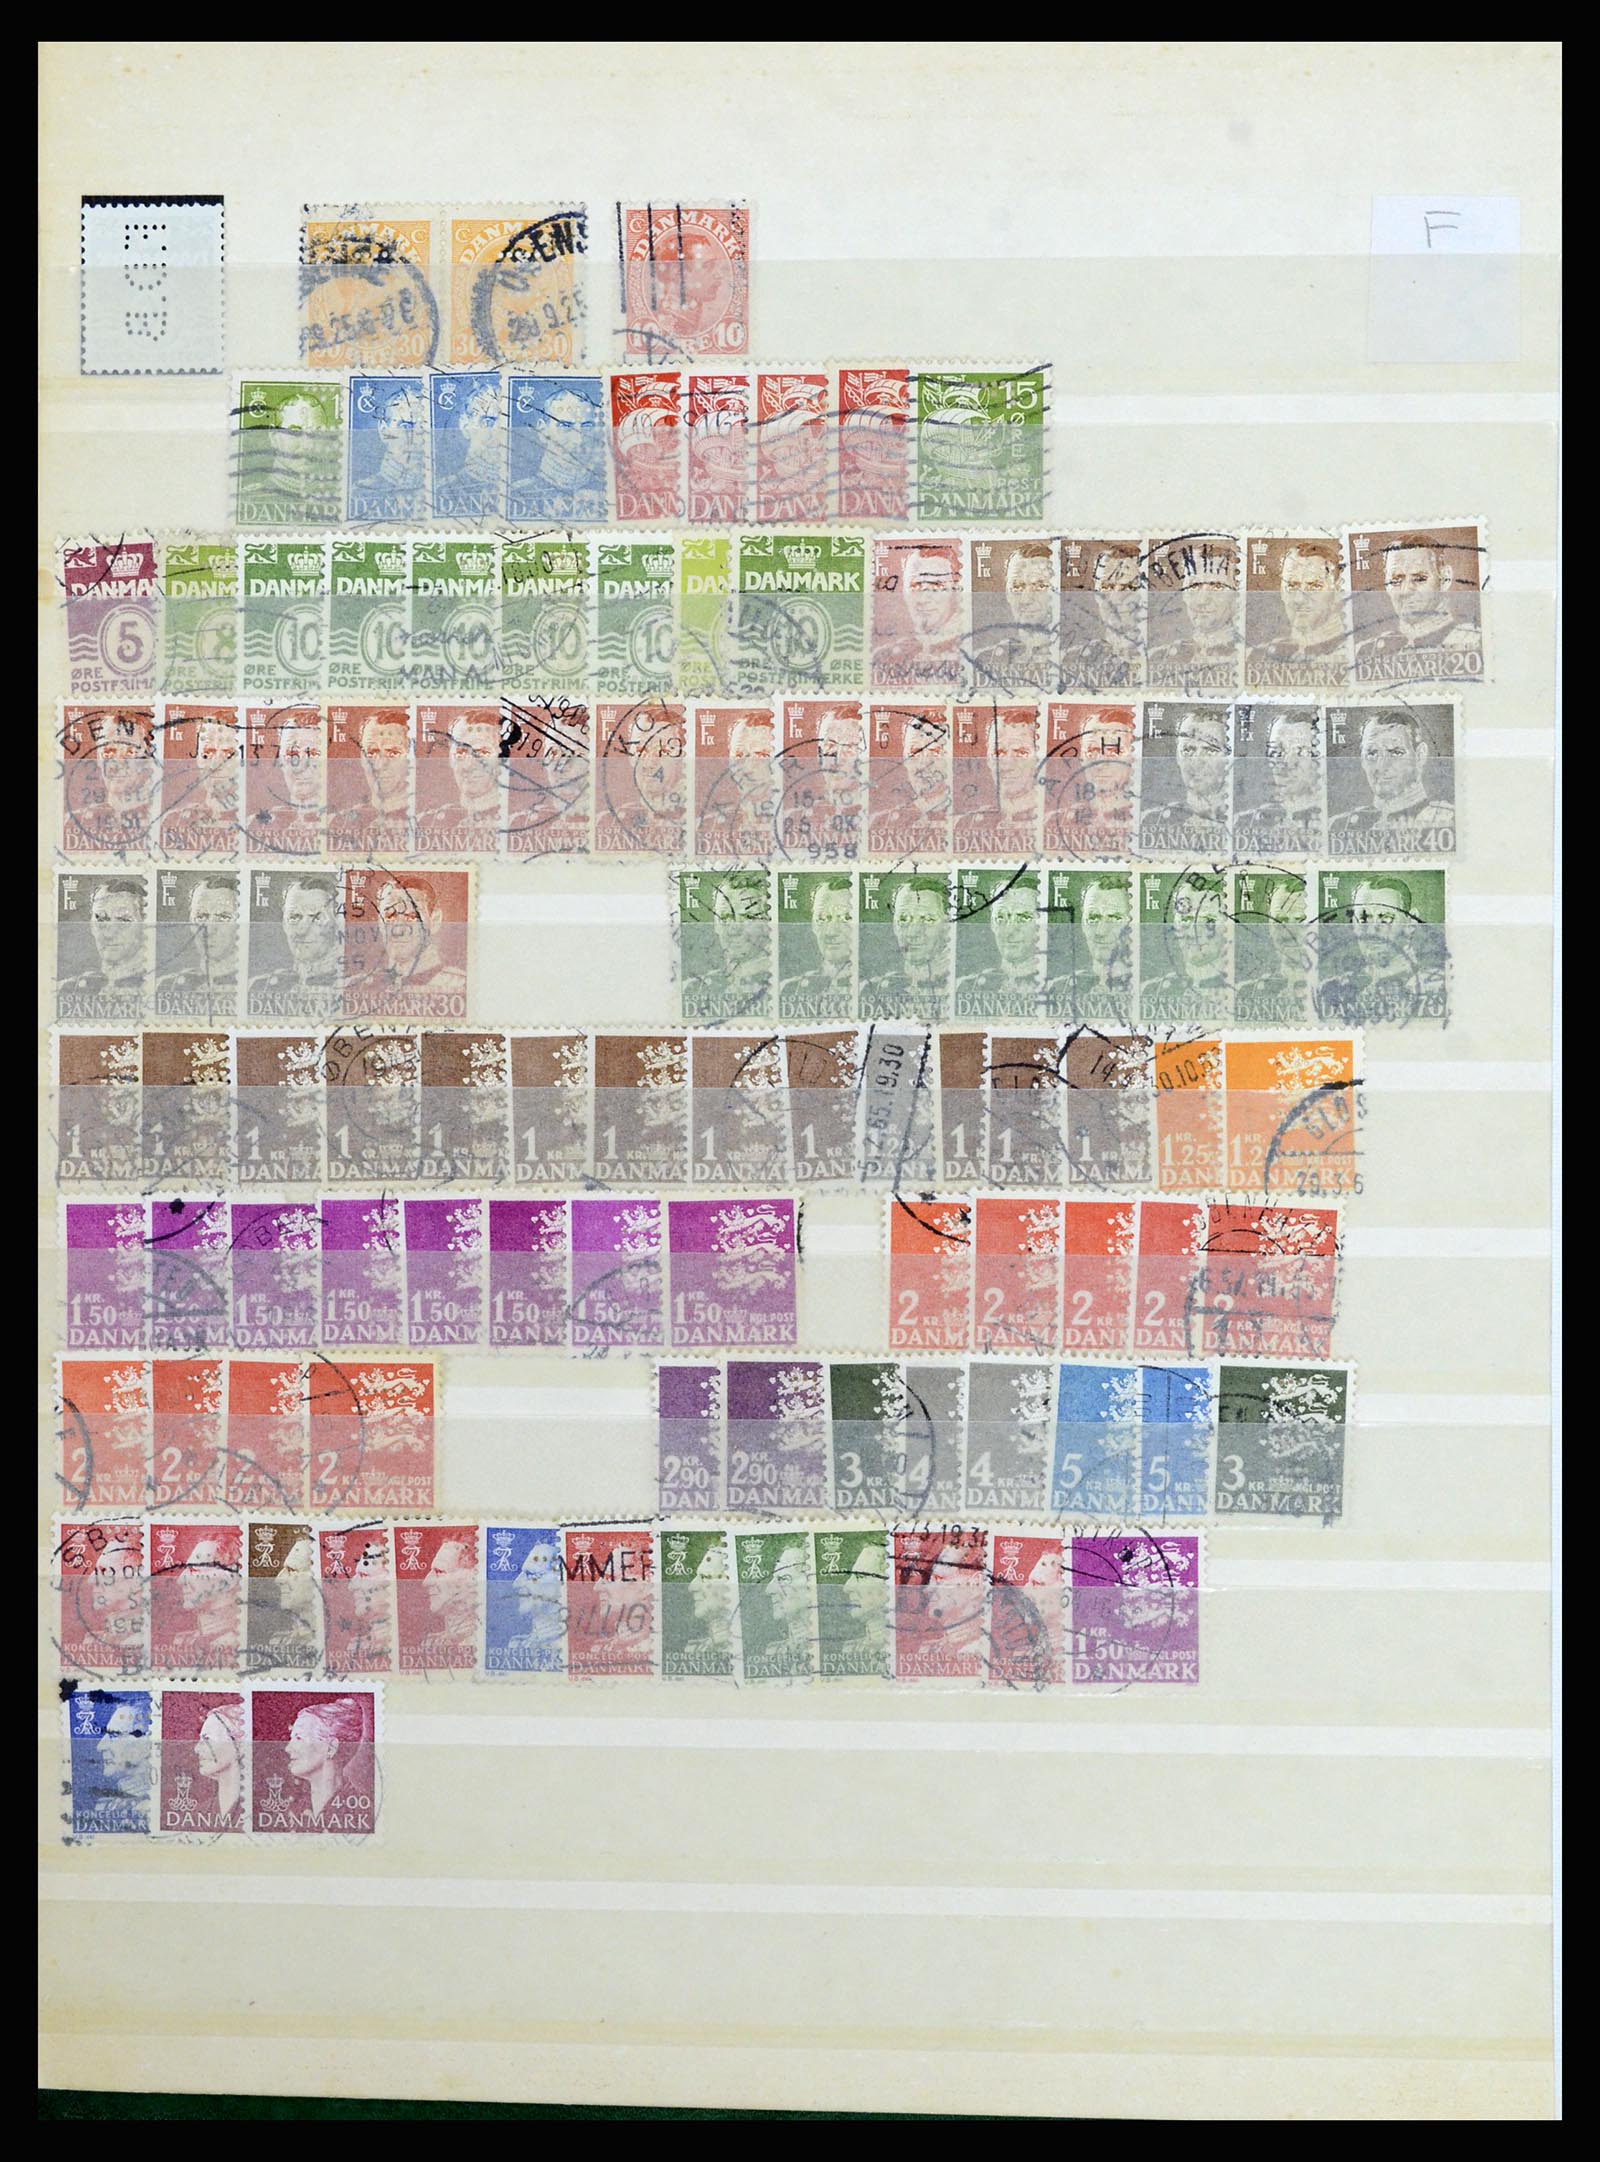 37056 072 - Stamp collection 37056 Denmark perfins.